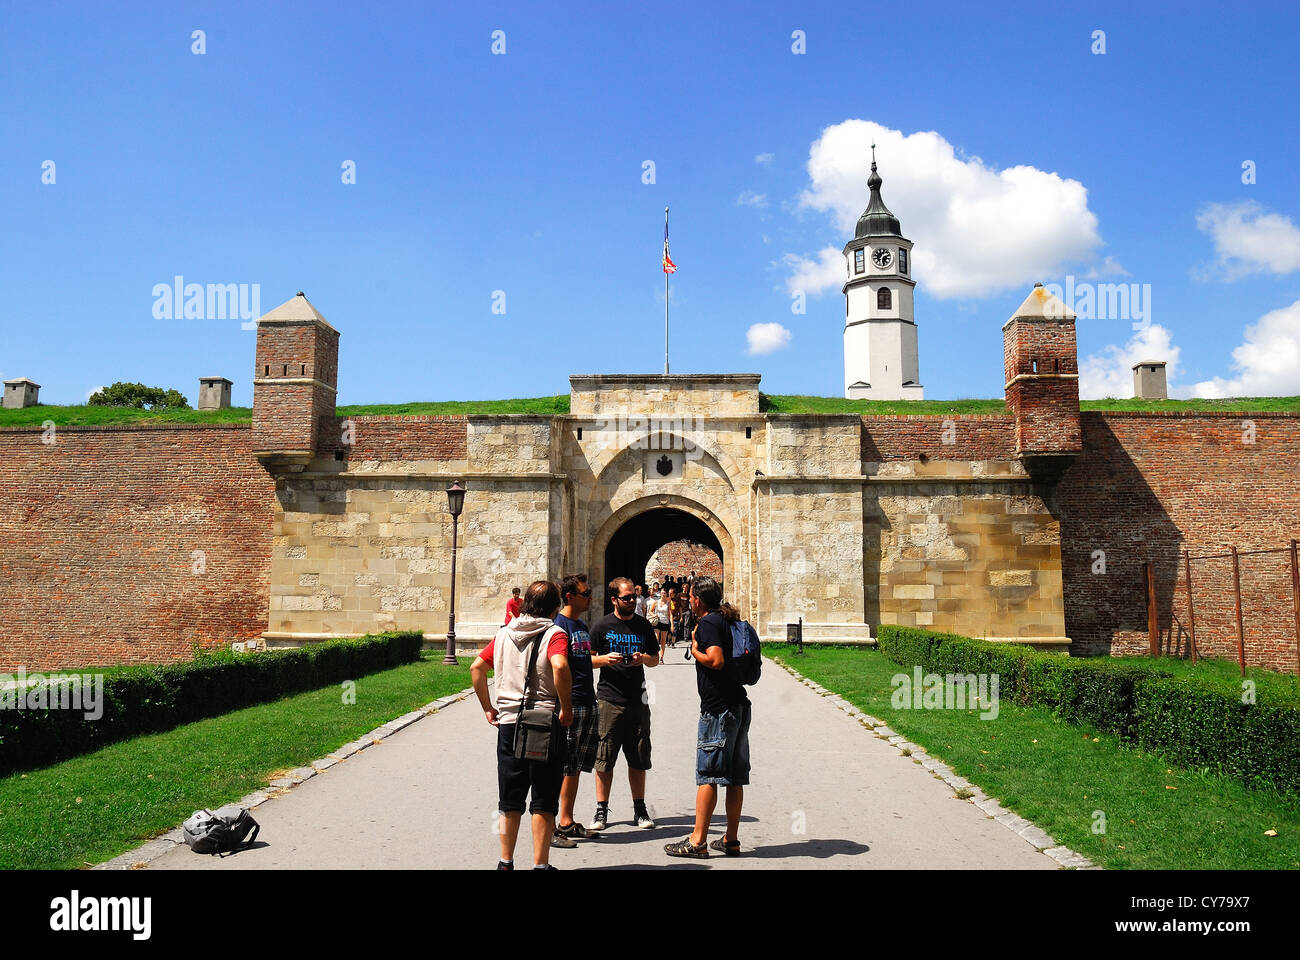 Belgrade Fortress - Wikipedia